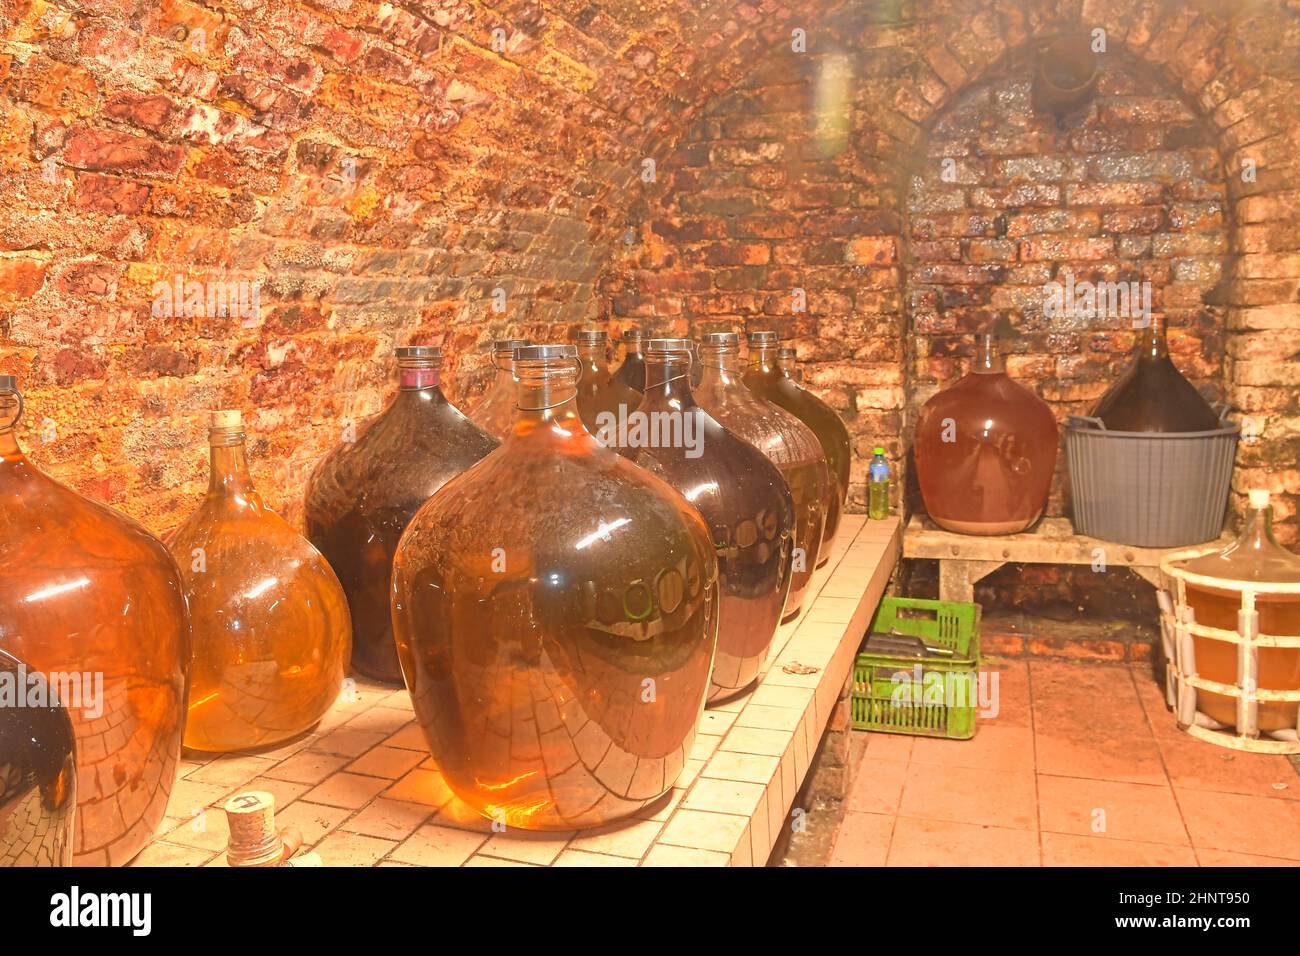 Vintage demijohns in a traditional wine cellar. Demijohn wine bottles Stock Photo